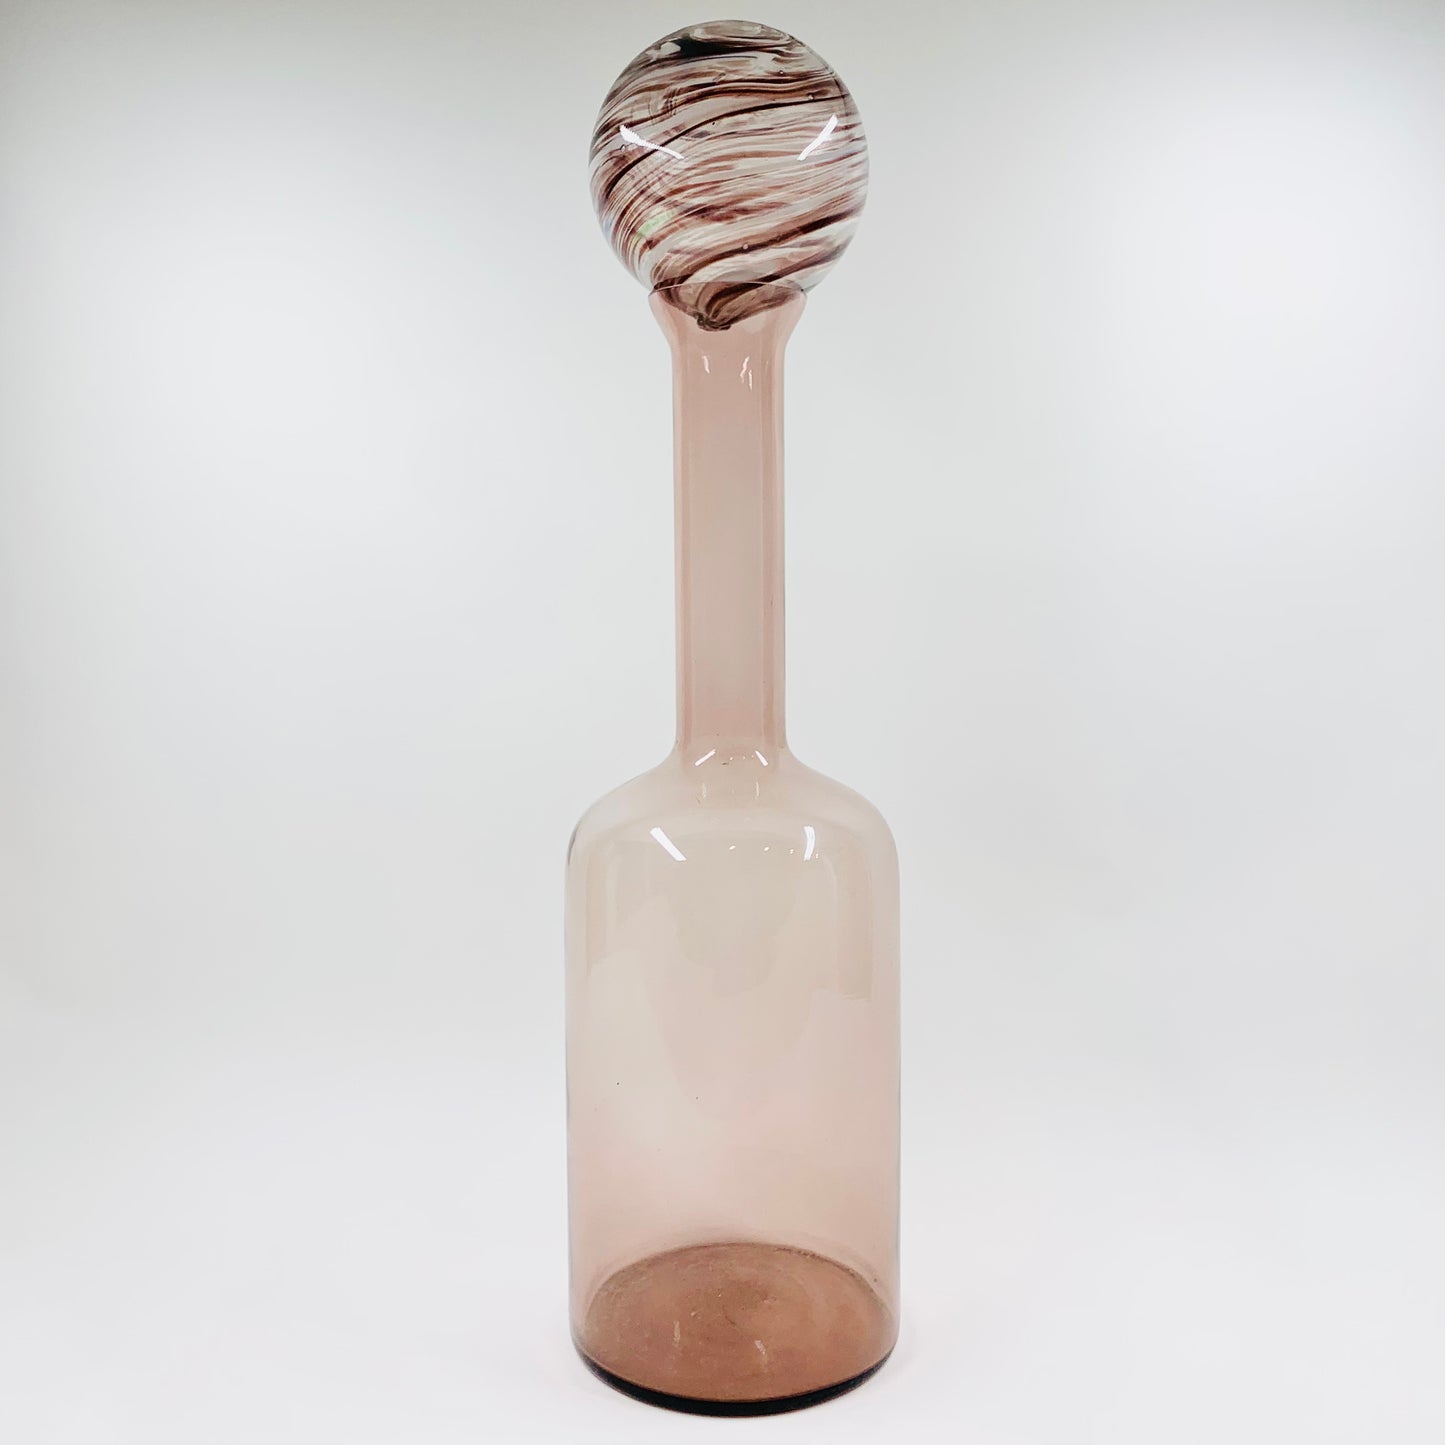 Midcentury turquoise glass bottle vase with art glass ball stopper